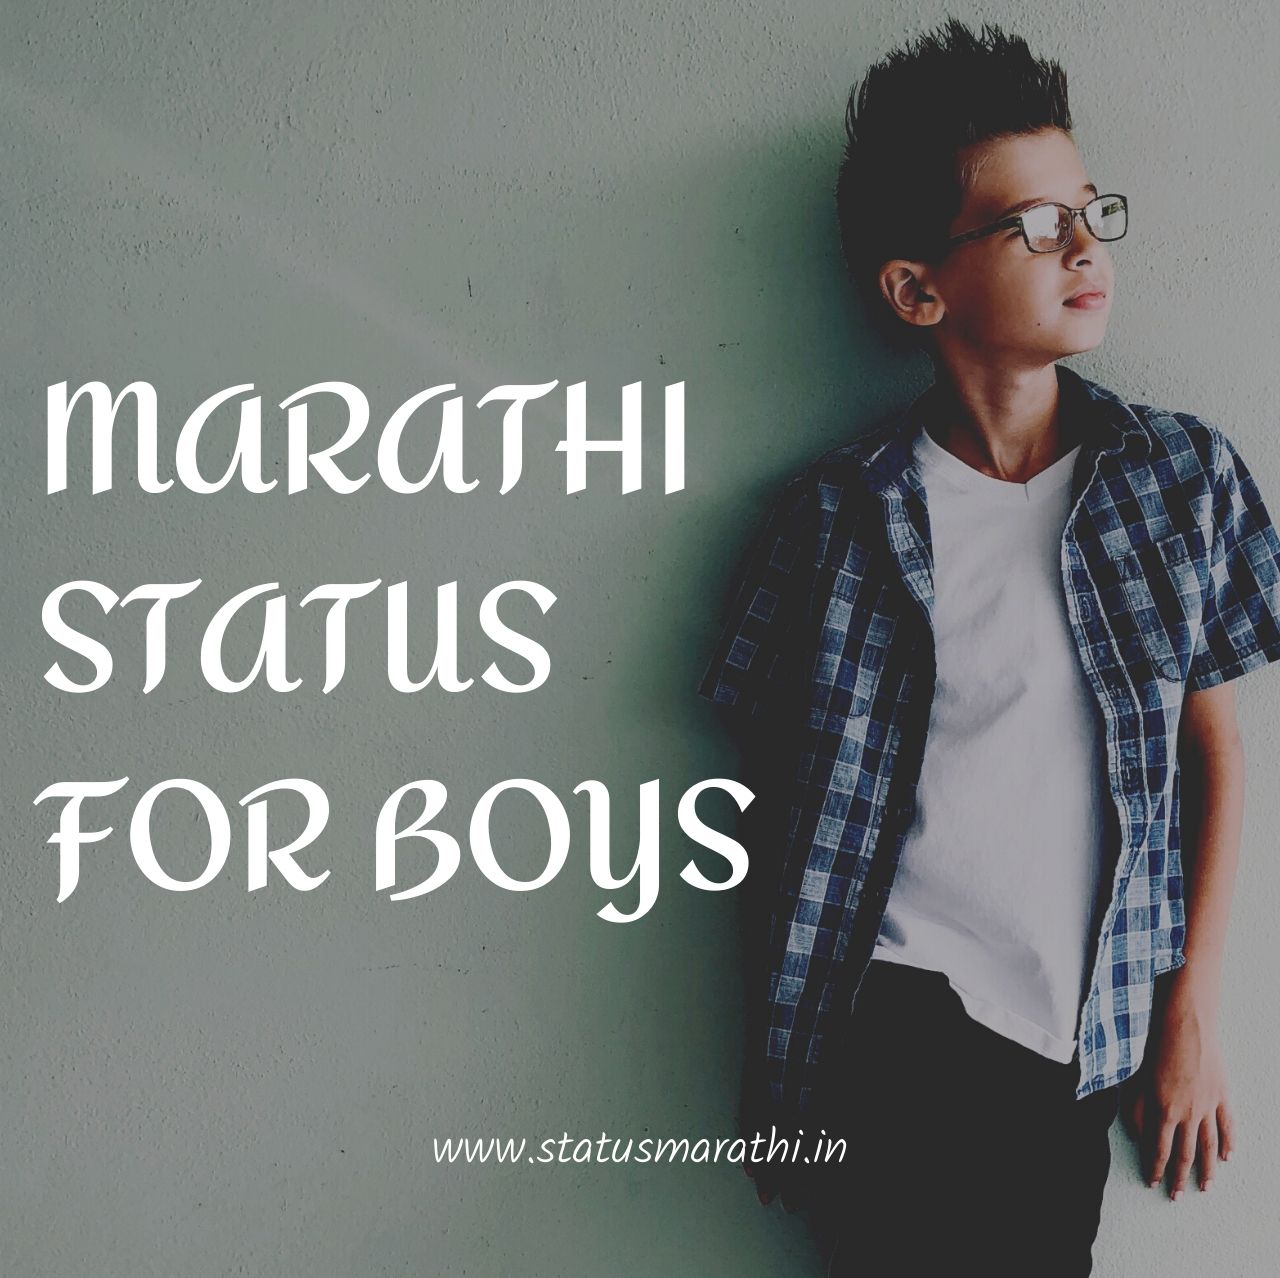 Marathi status for boys